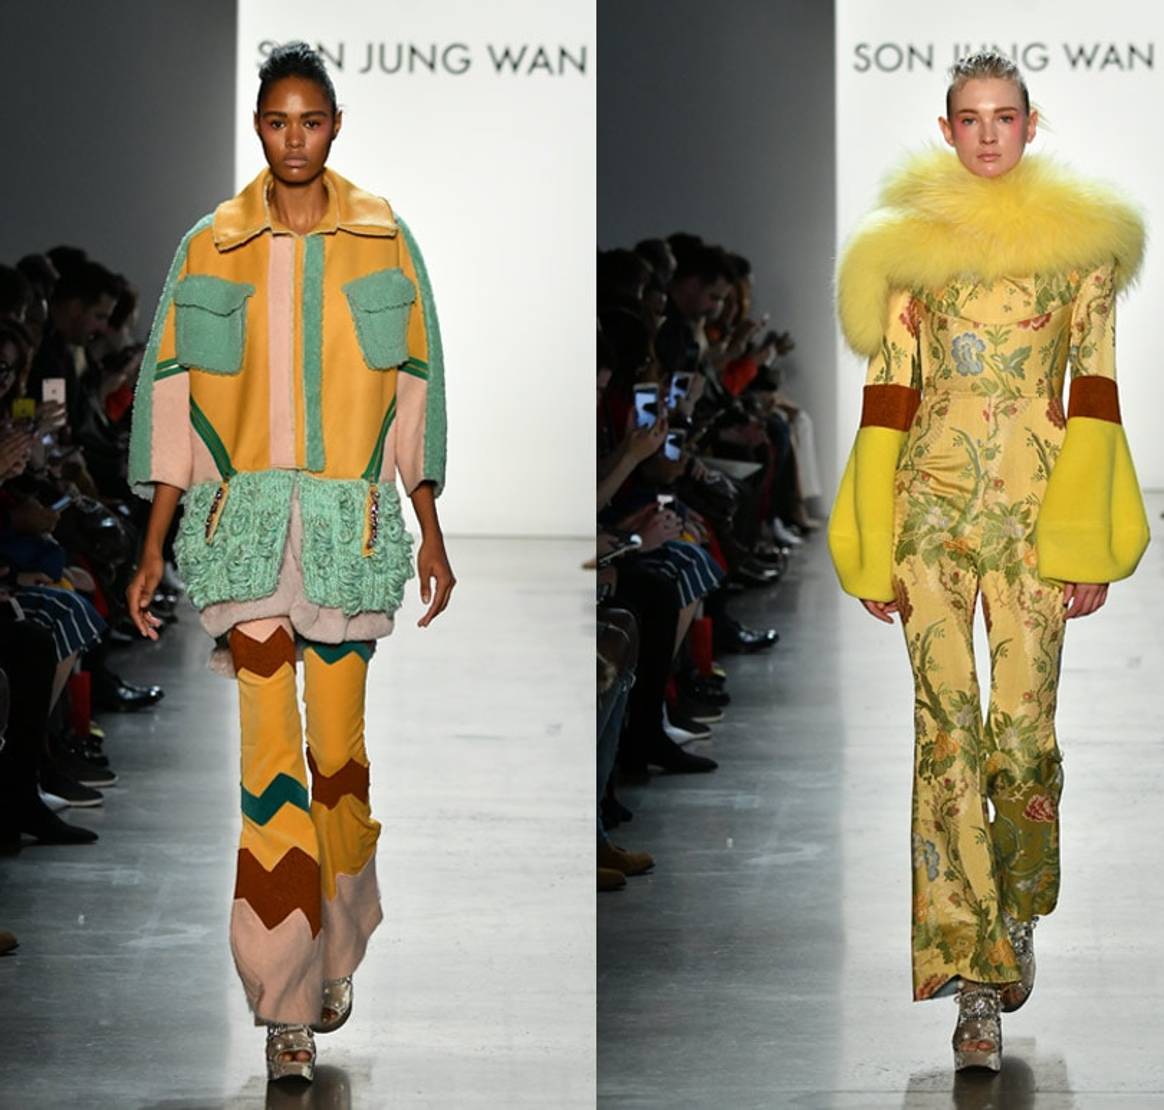 Son Jung Wan keeps it maximalist for New York Fashion Week